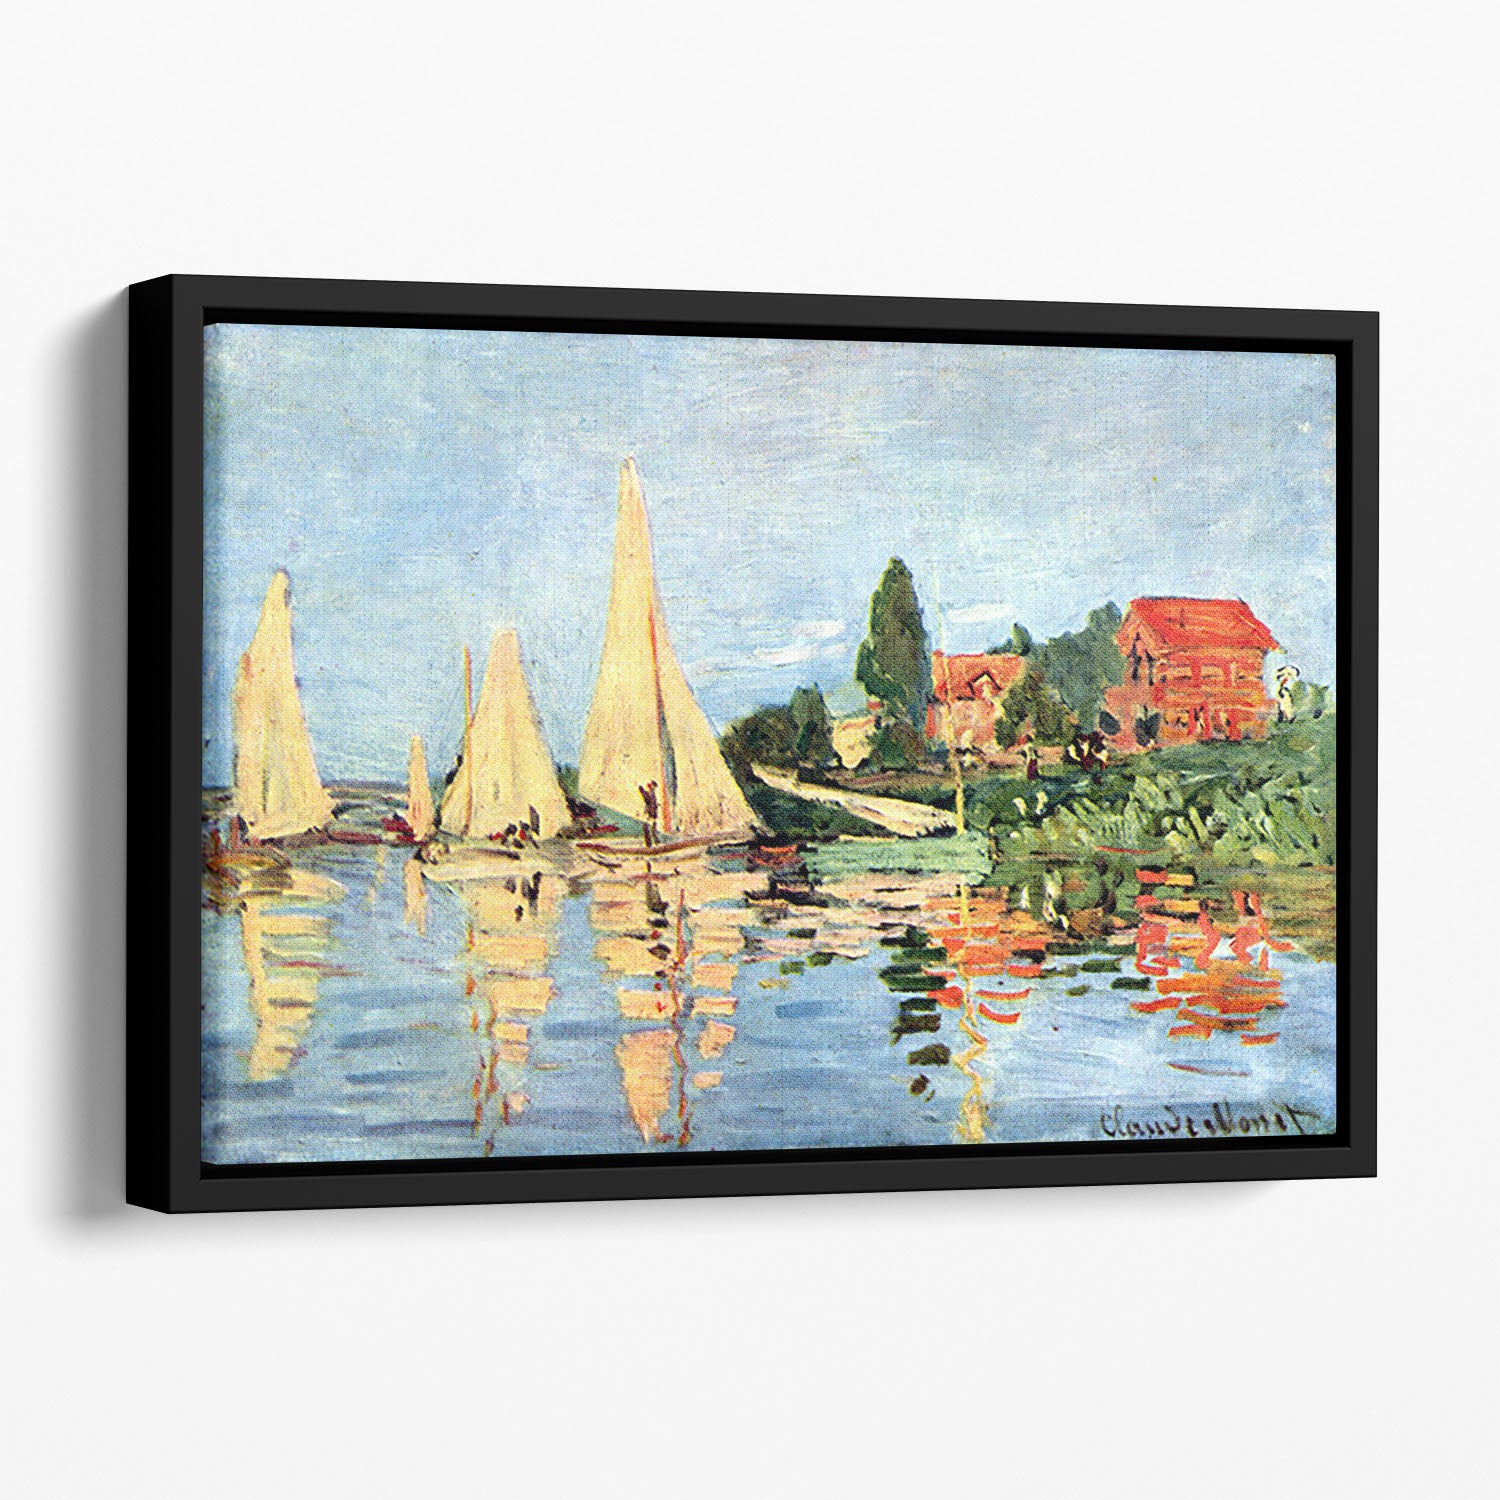 Regatta at Argenteuil by Monet Floating Framed Canvas